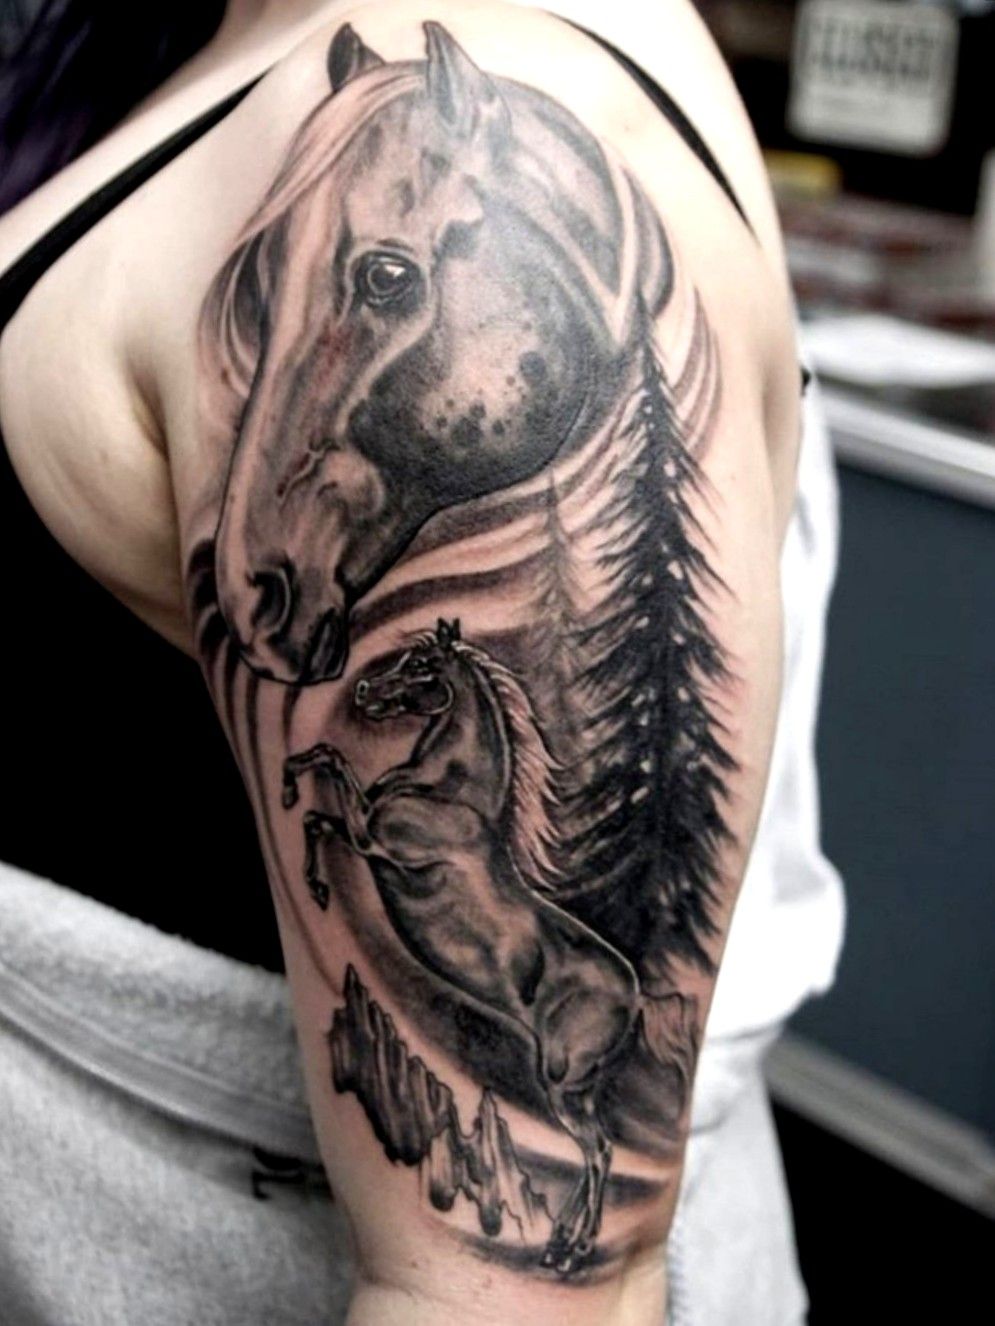 Arm Realistic Flower Horse Tattoo by Tattoo Studio 73